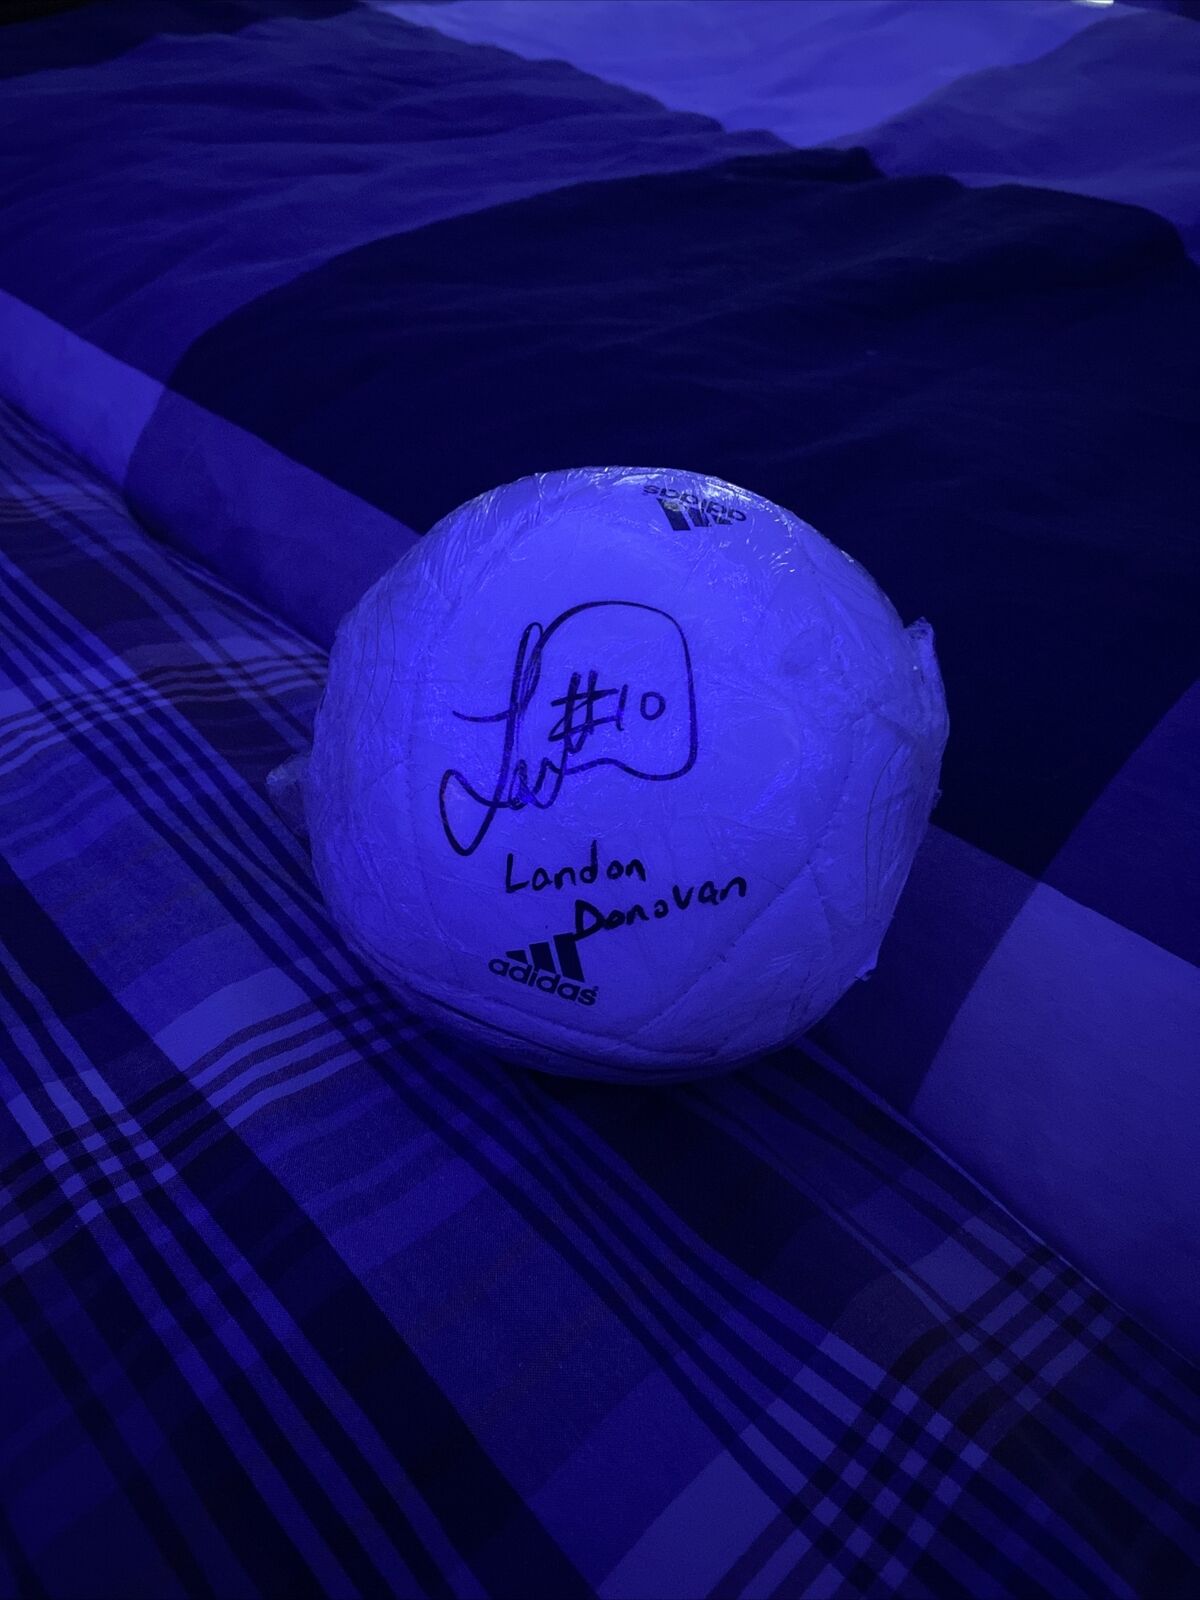 Landon Donovan Signed Autographed Soccer Ball Tropheo Size 5 Gal